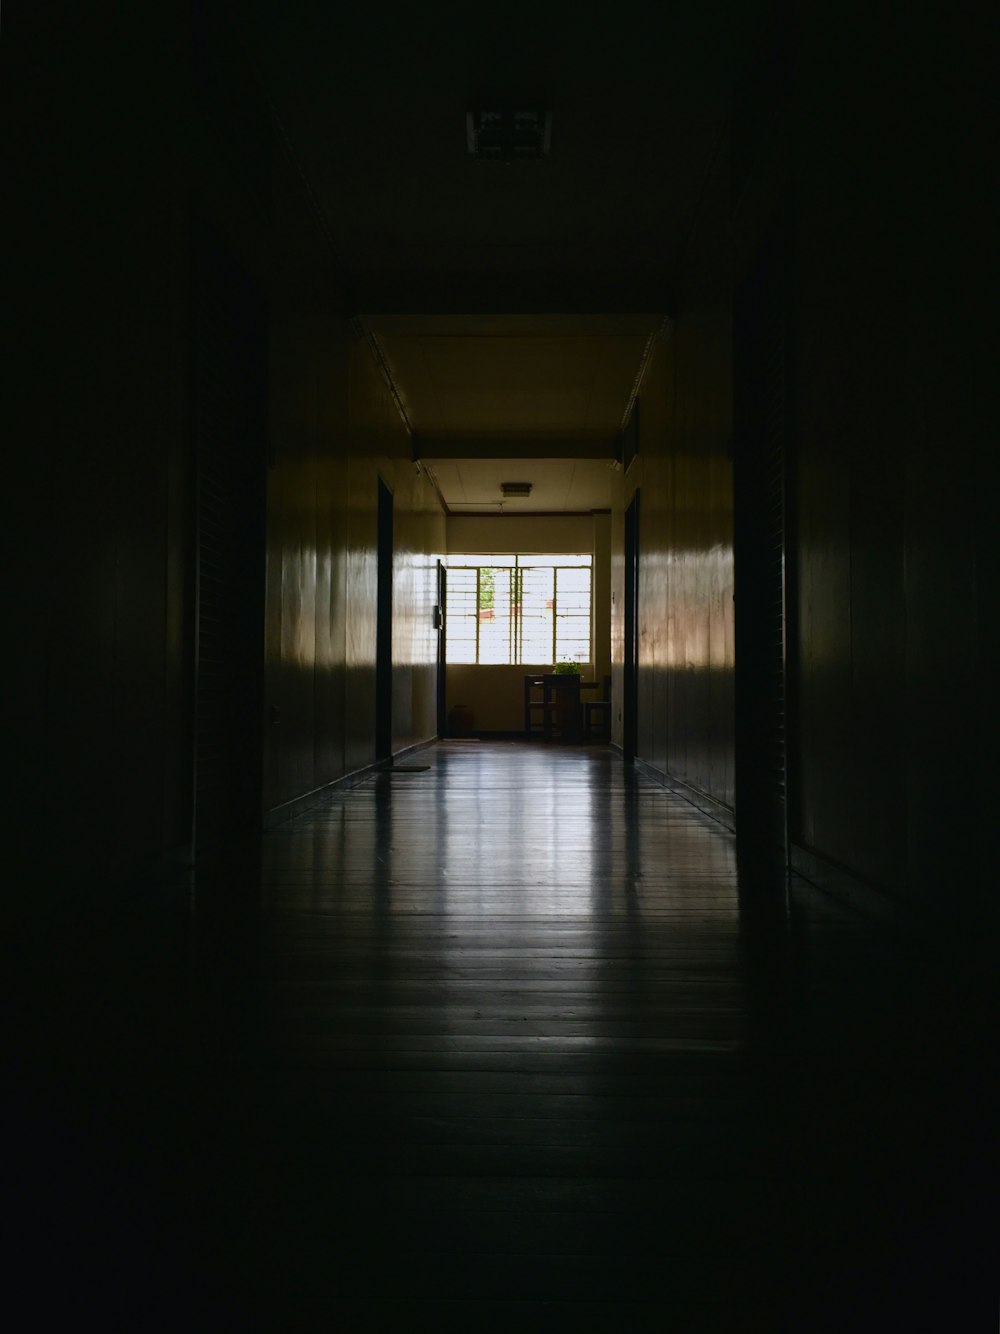 dim-lit empty hallway of a building